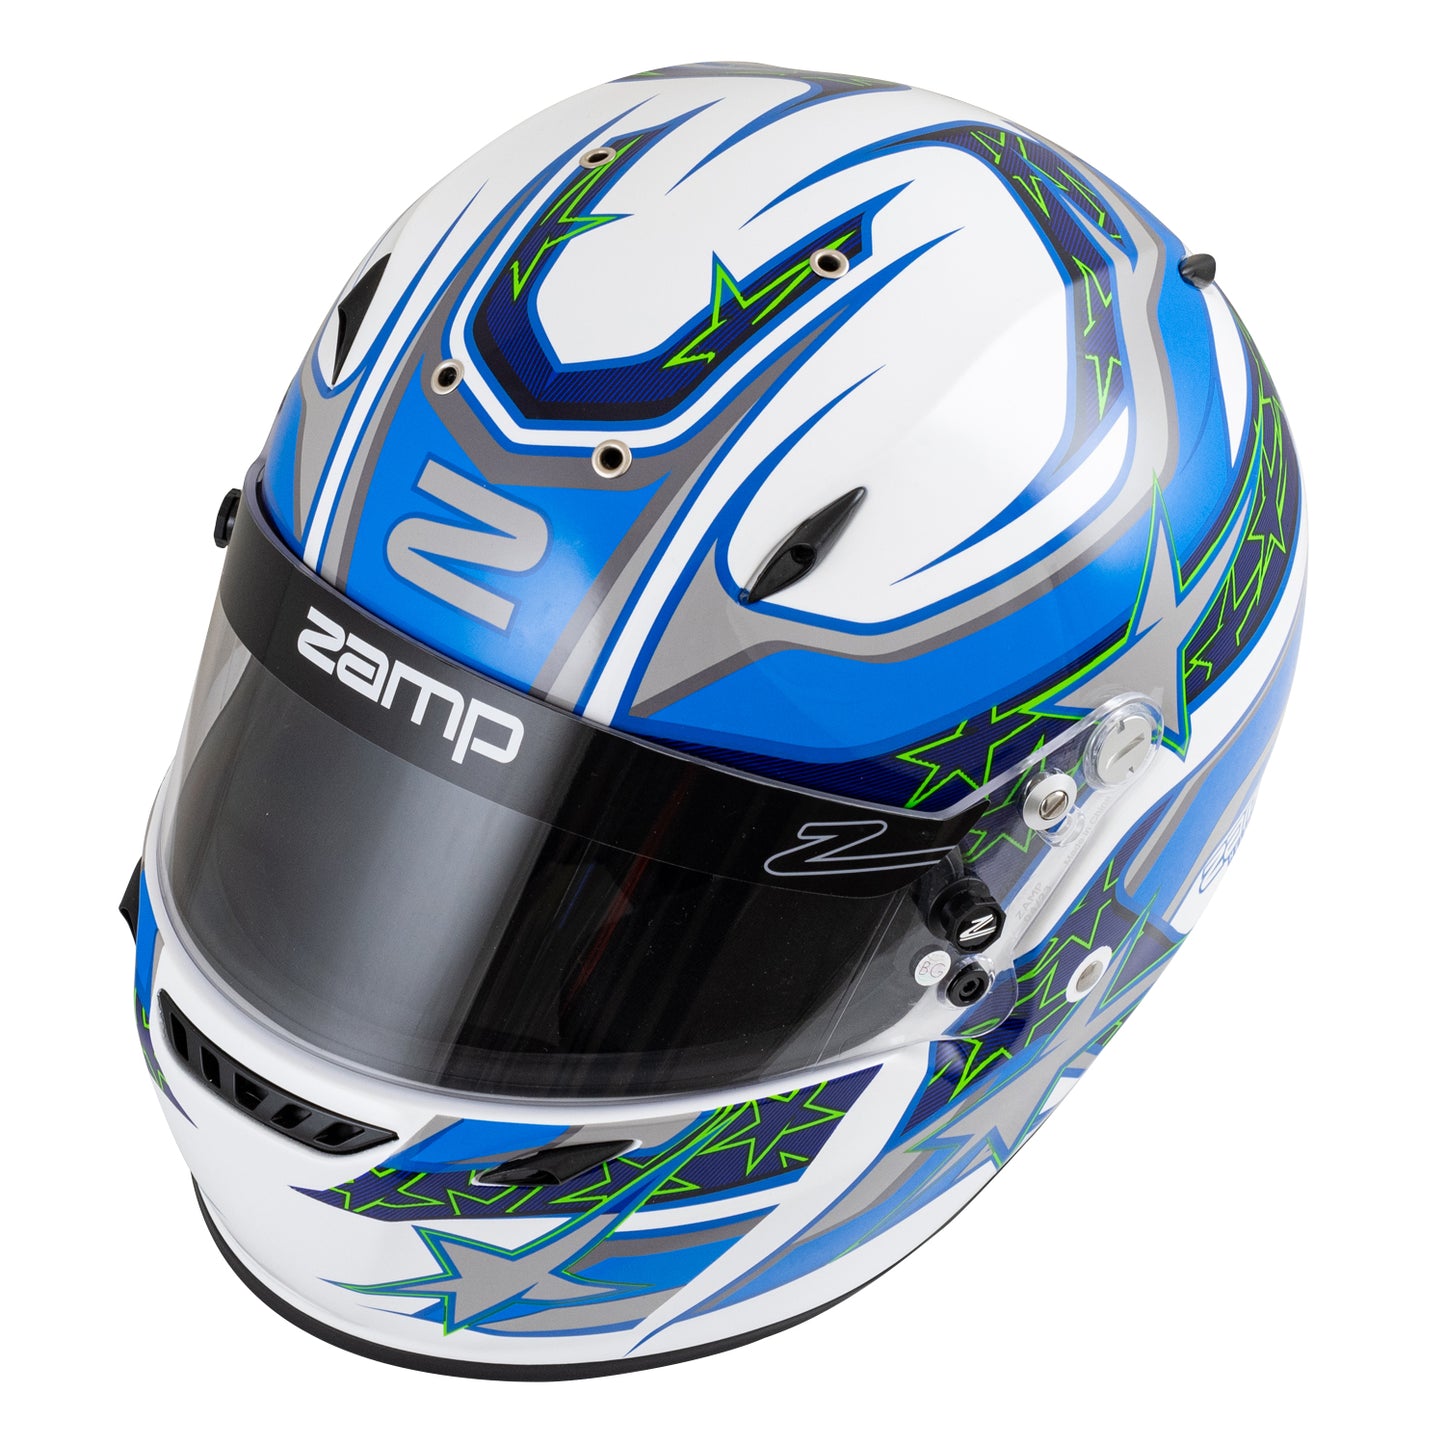 Zamp ZR-72 Auto Racing Graphic Helmet-Gloss White/Blue/Lt Blue